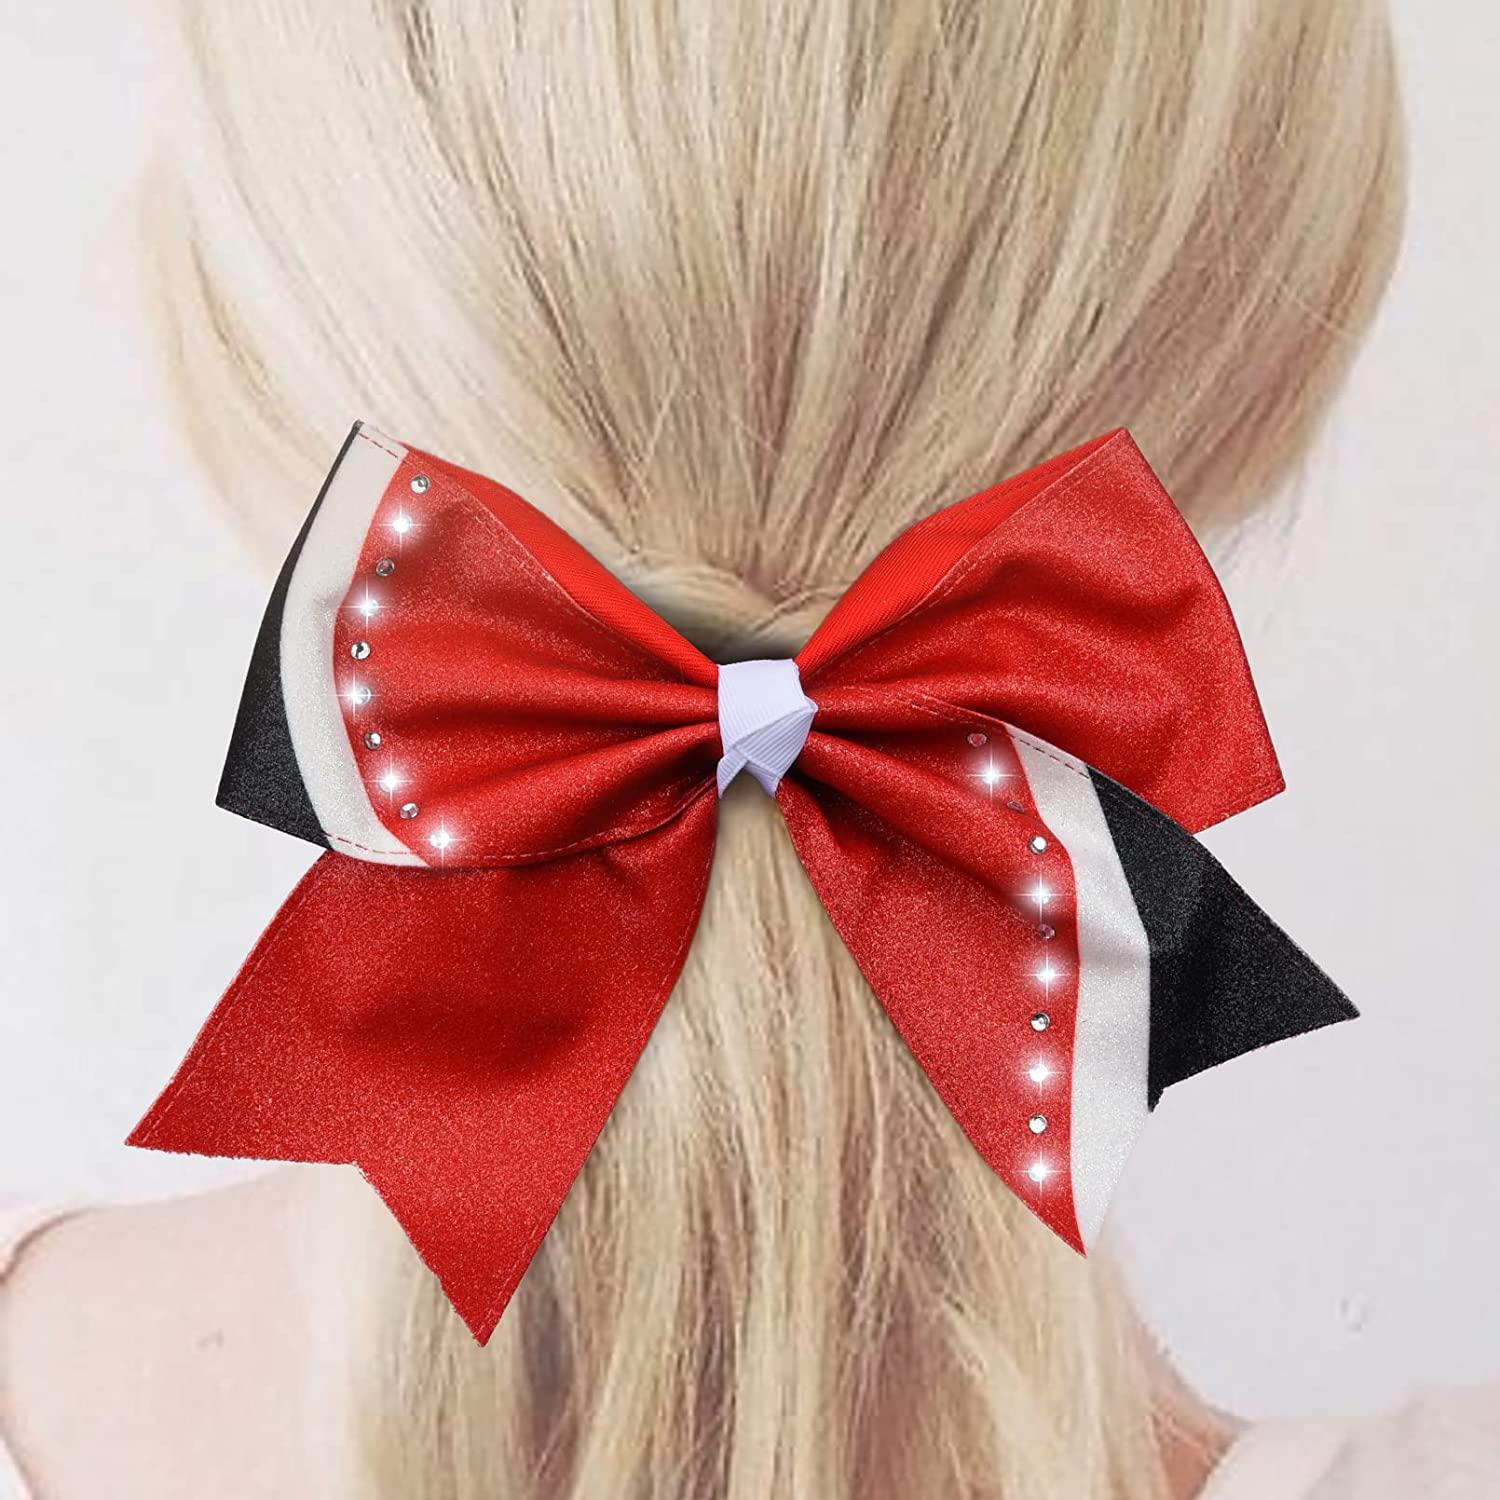 8 Glitter Red Cheer Bows - CEELGON Large Shiny Red Rhinestone Black Cheer  Hair Bows 8PCS Ponytail Holder Handmade for Cheerleader Girls Softball  Sports -Pack of 8 -Red/Black 8 Inch Glitter Red/Black(Pack